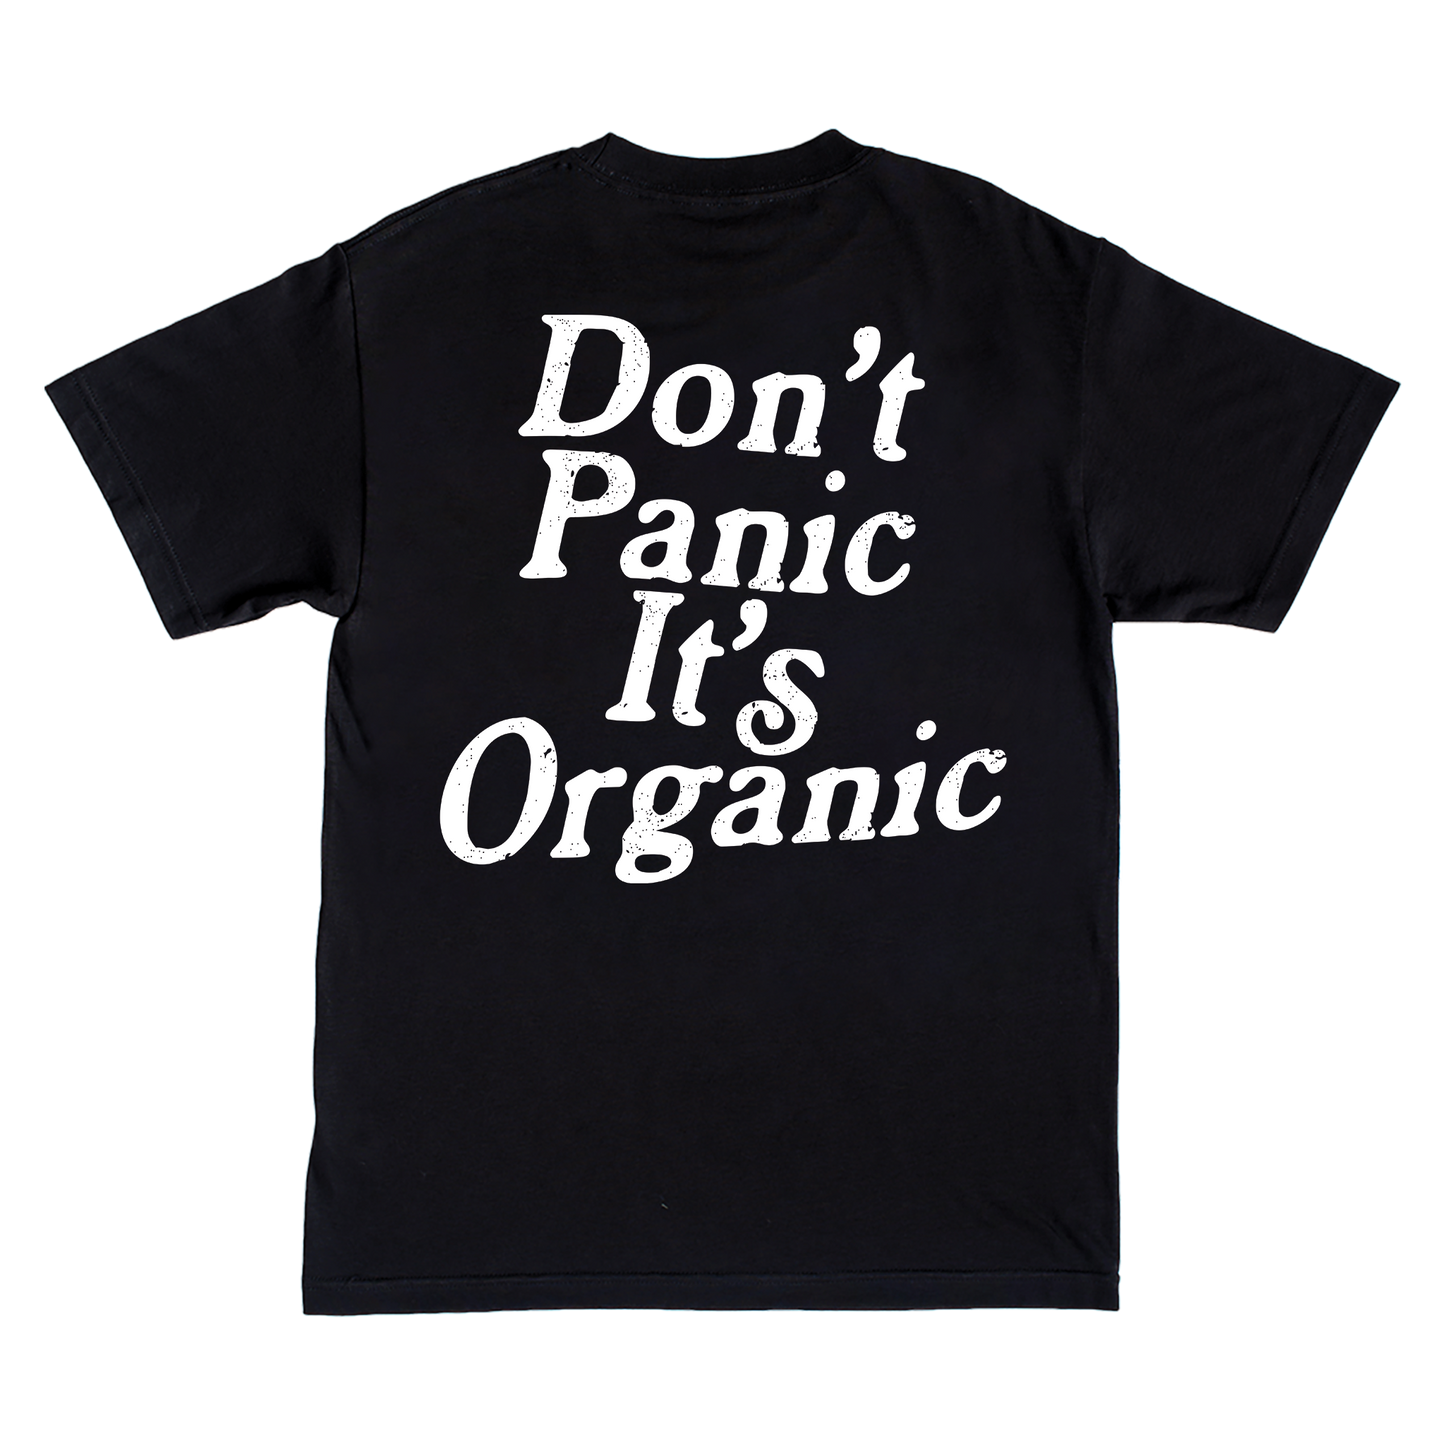 It's Organic T-Shirt